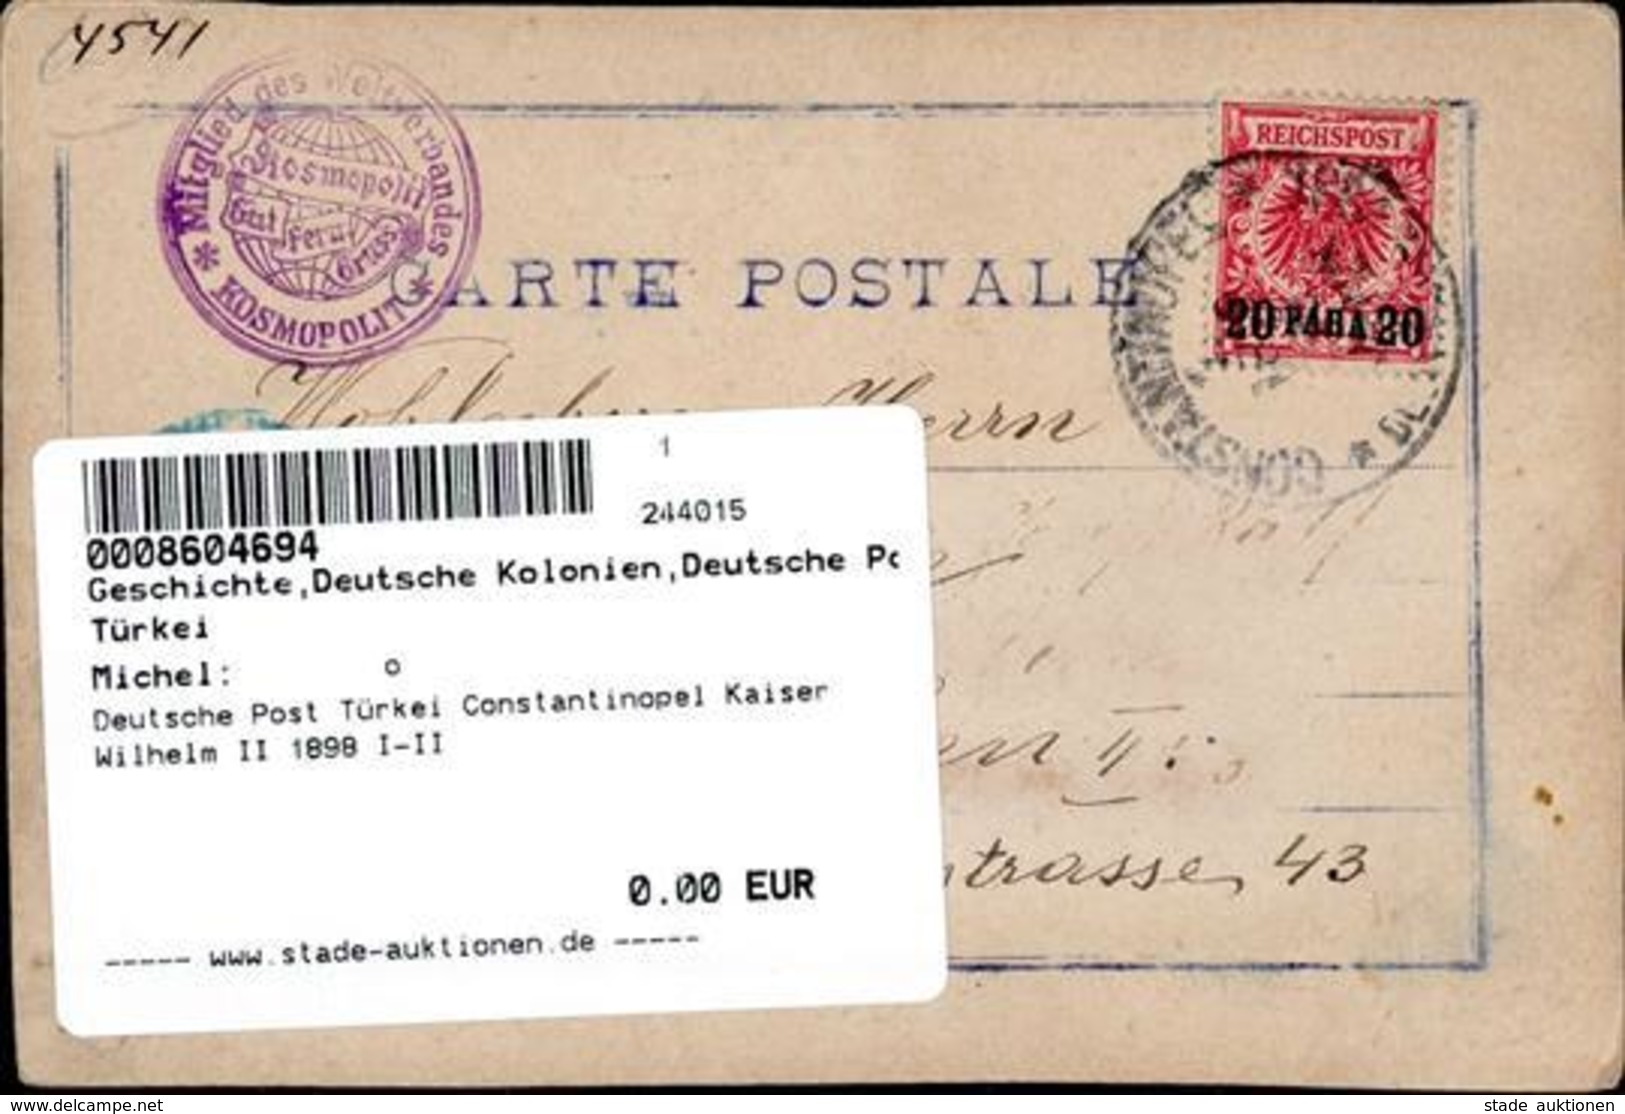 Deutsche Post Türkei Constantinopel Kaiser Wilhelm II 1898 I-II - Historia